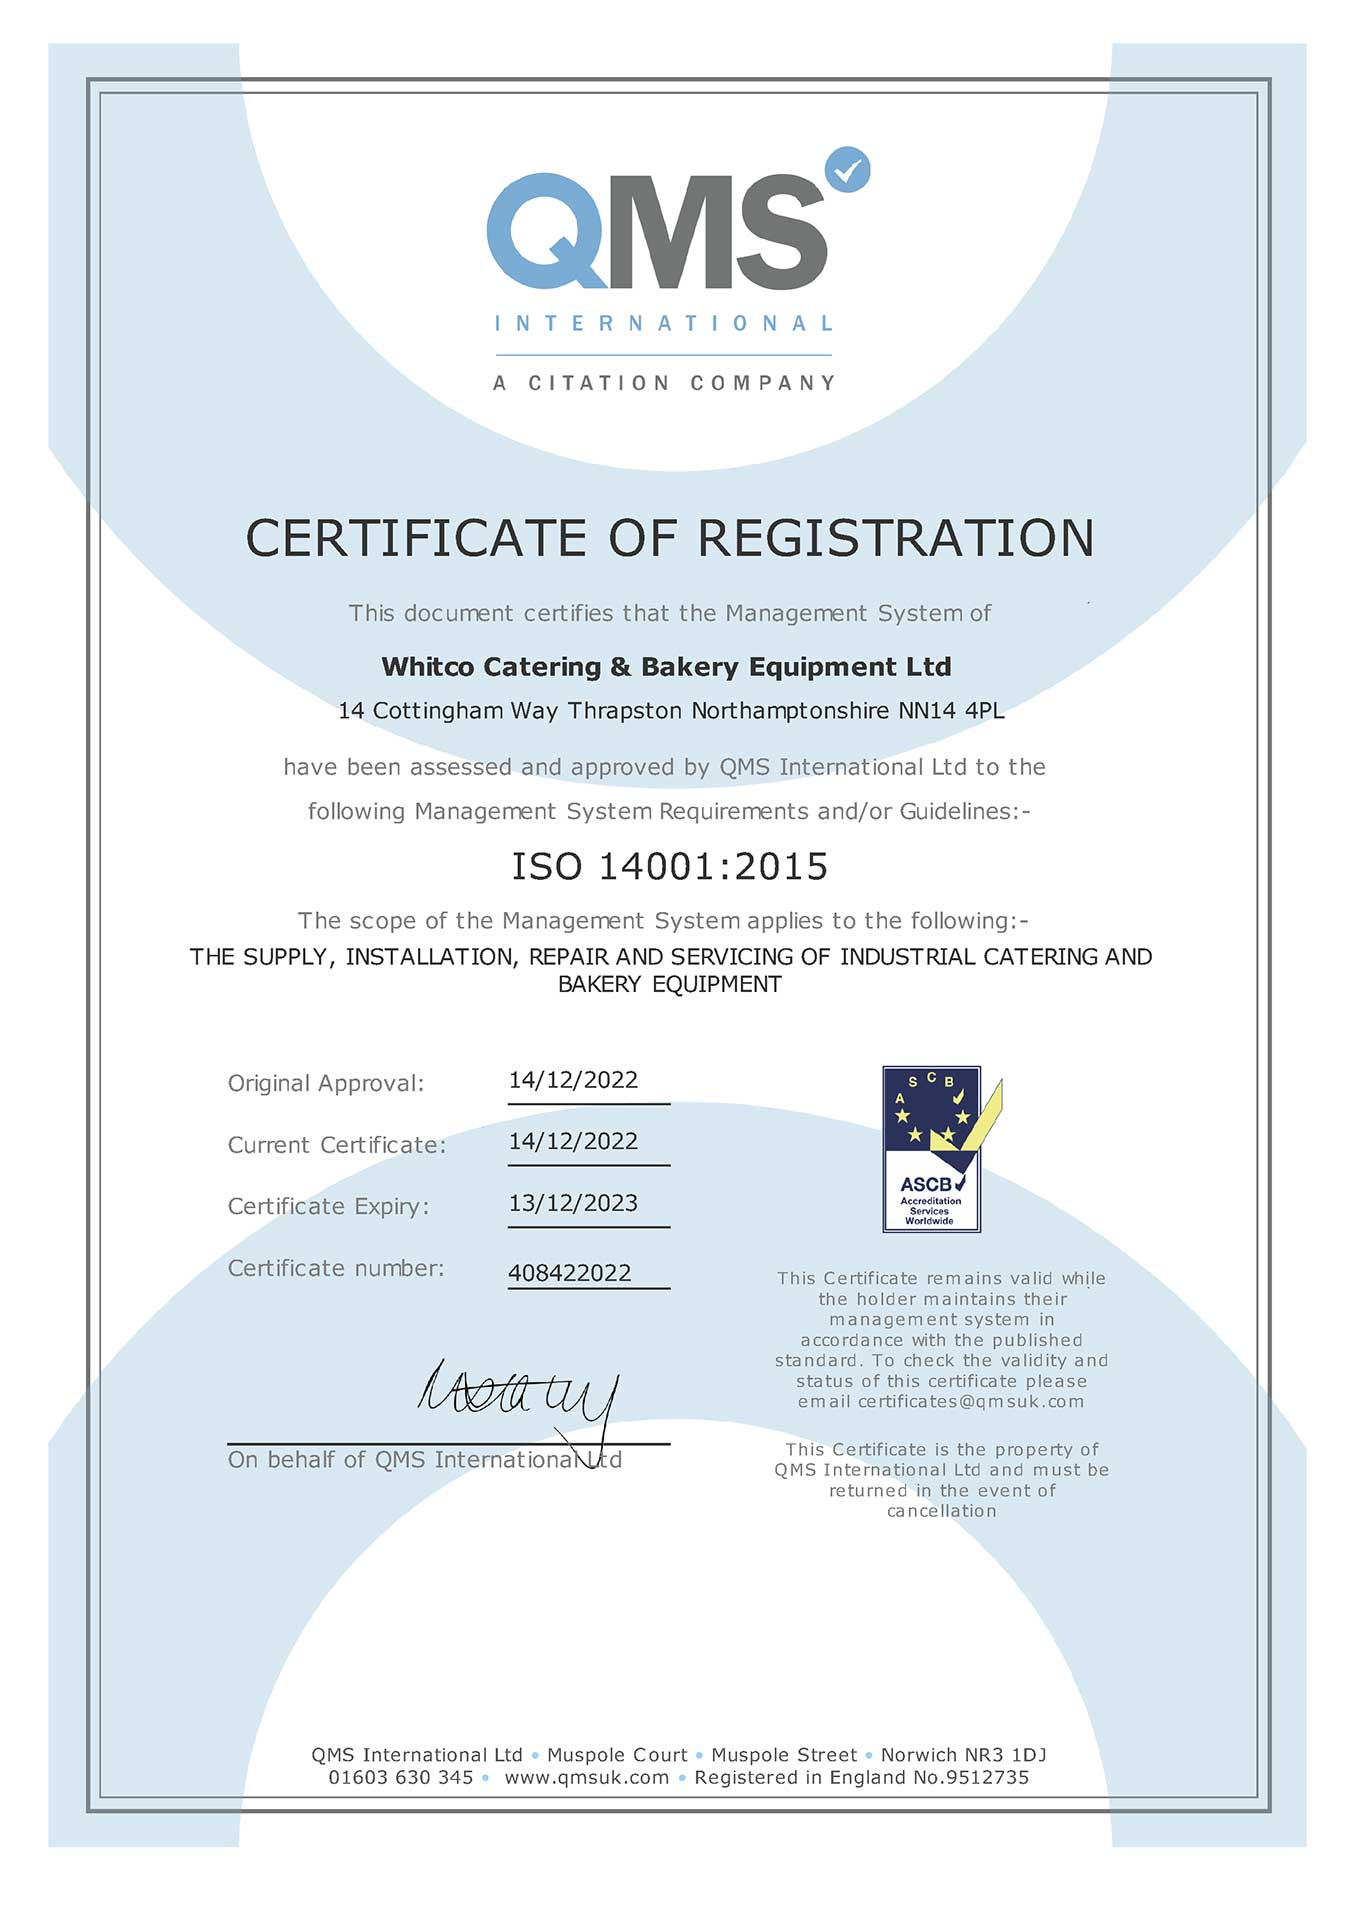 ISO 14001:2015 Certificate of Registration